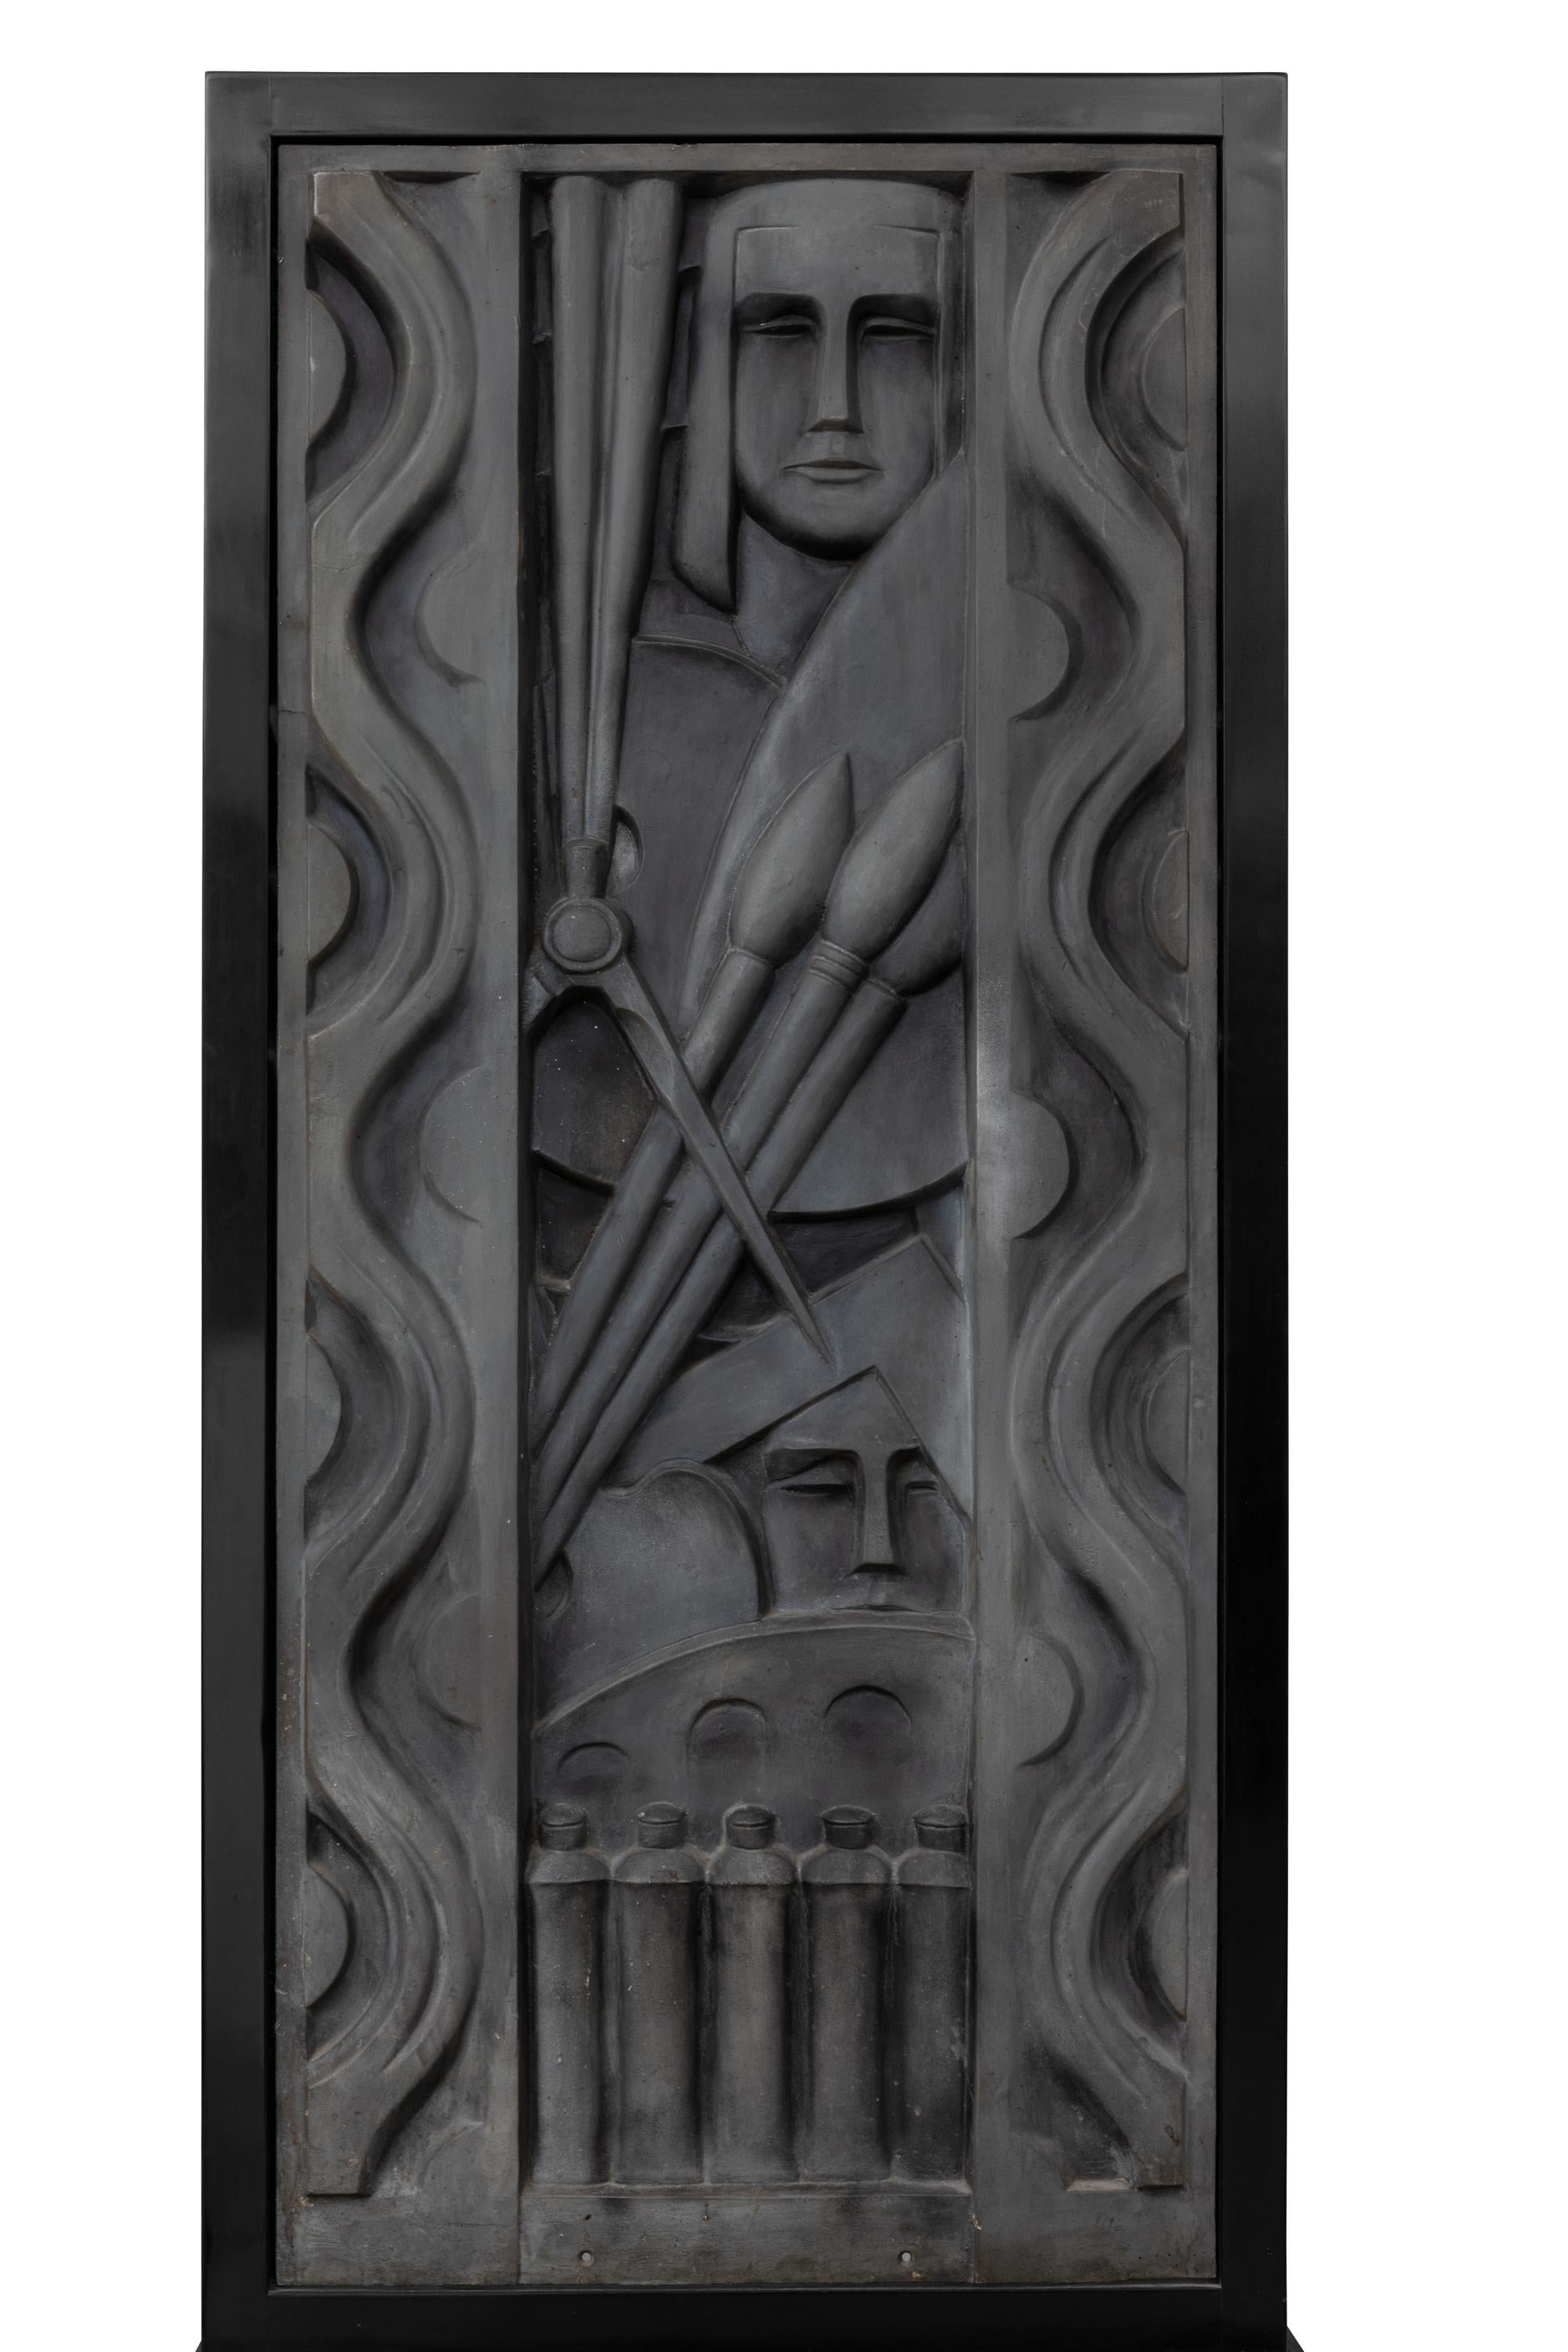 Art Deco Barbizon Plaza Hotel Cast Aluminum Frieze Panel, New York 1930